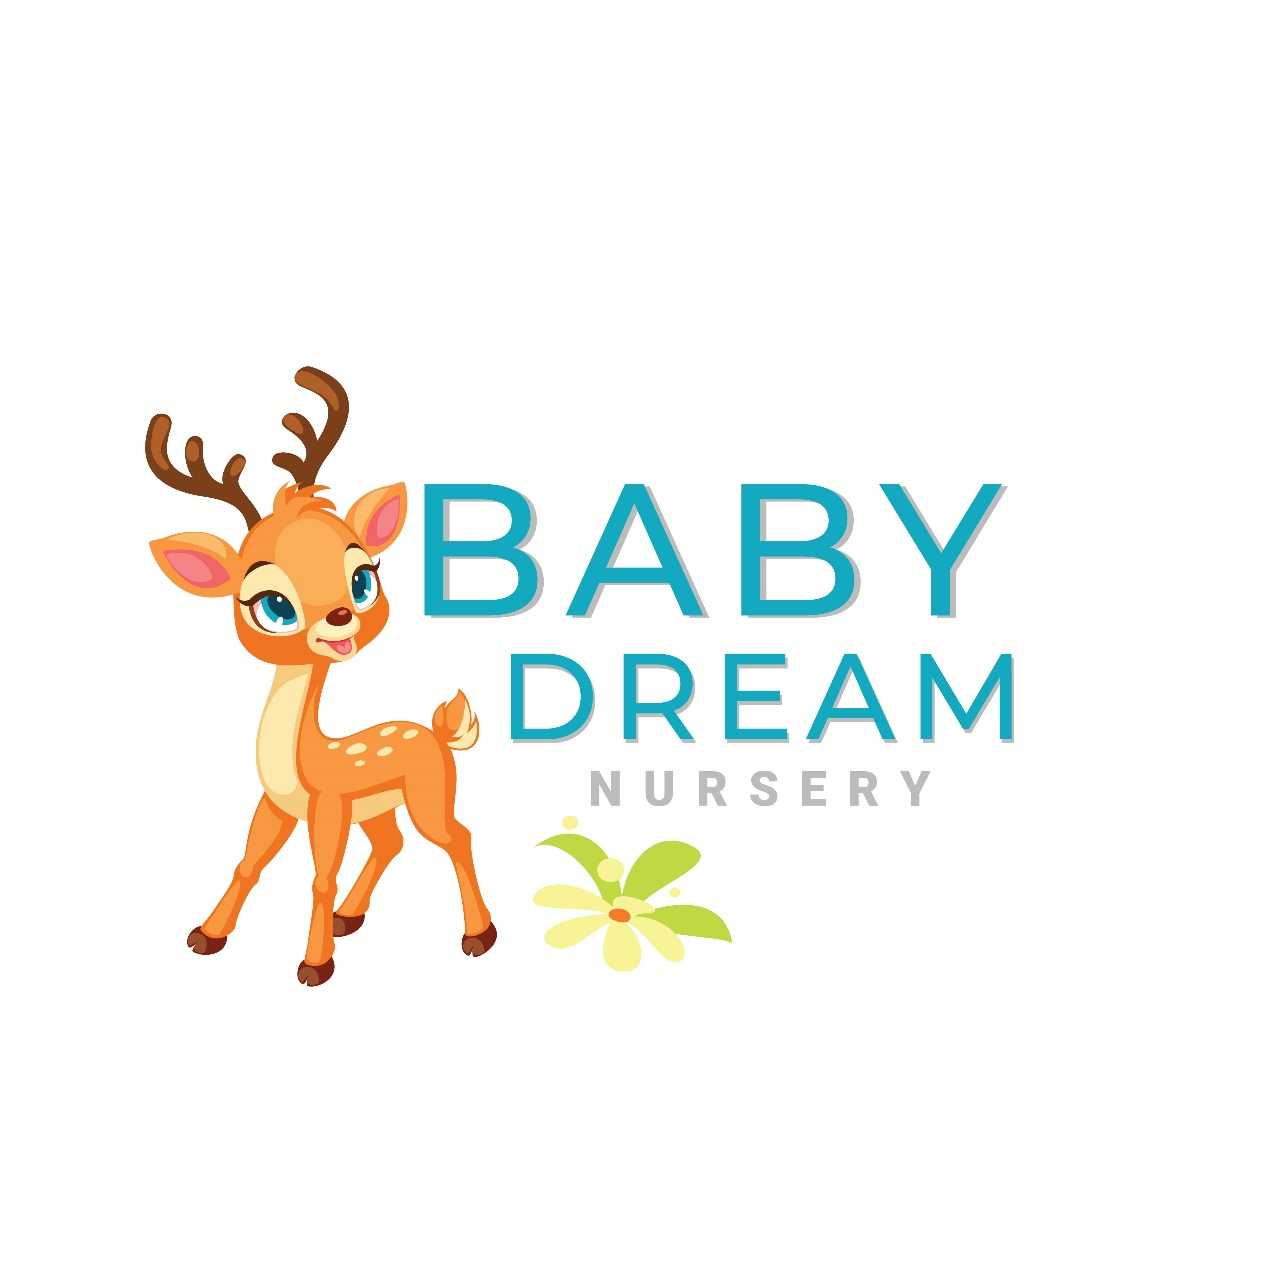 Baby dream nursery